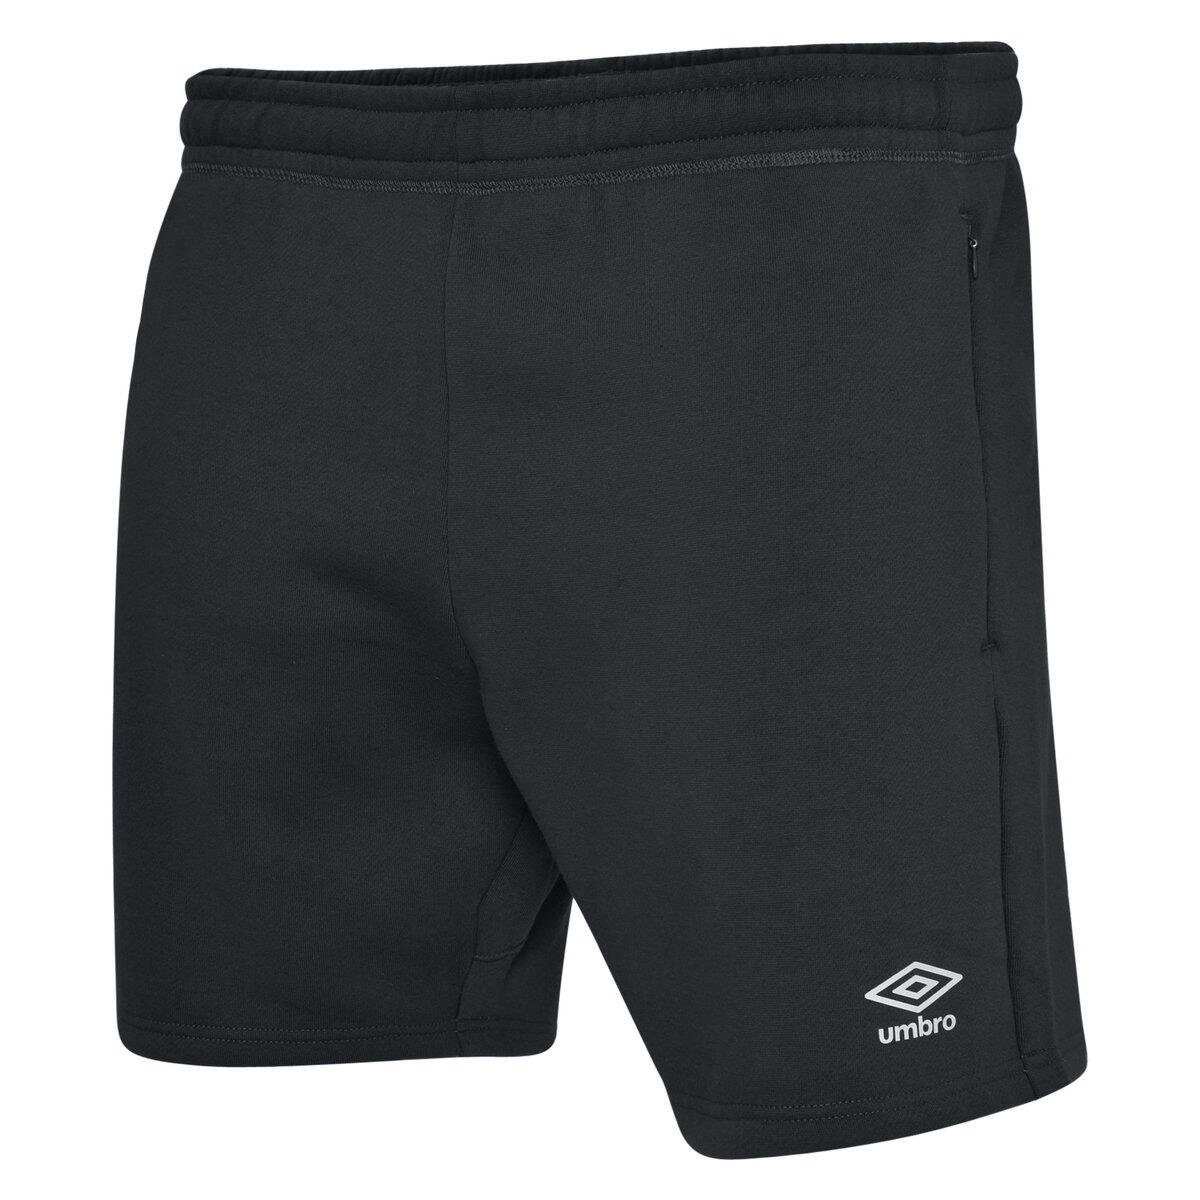 UMBRO Mens Club Leisure Shorts (Black/White)